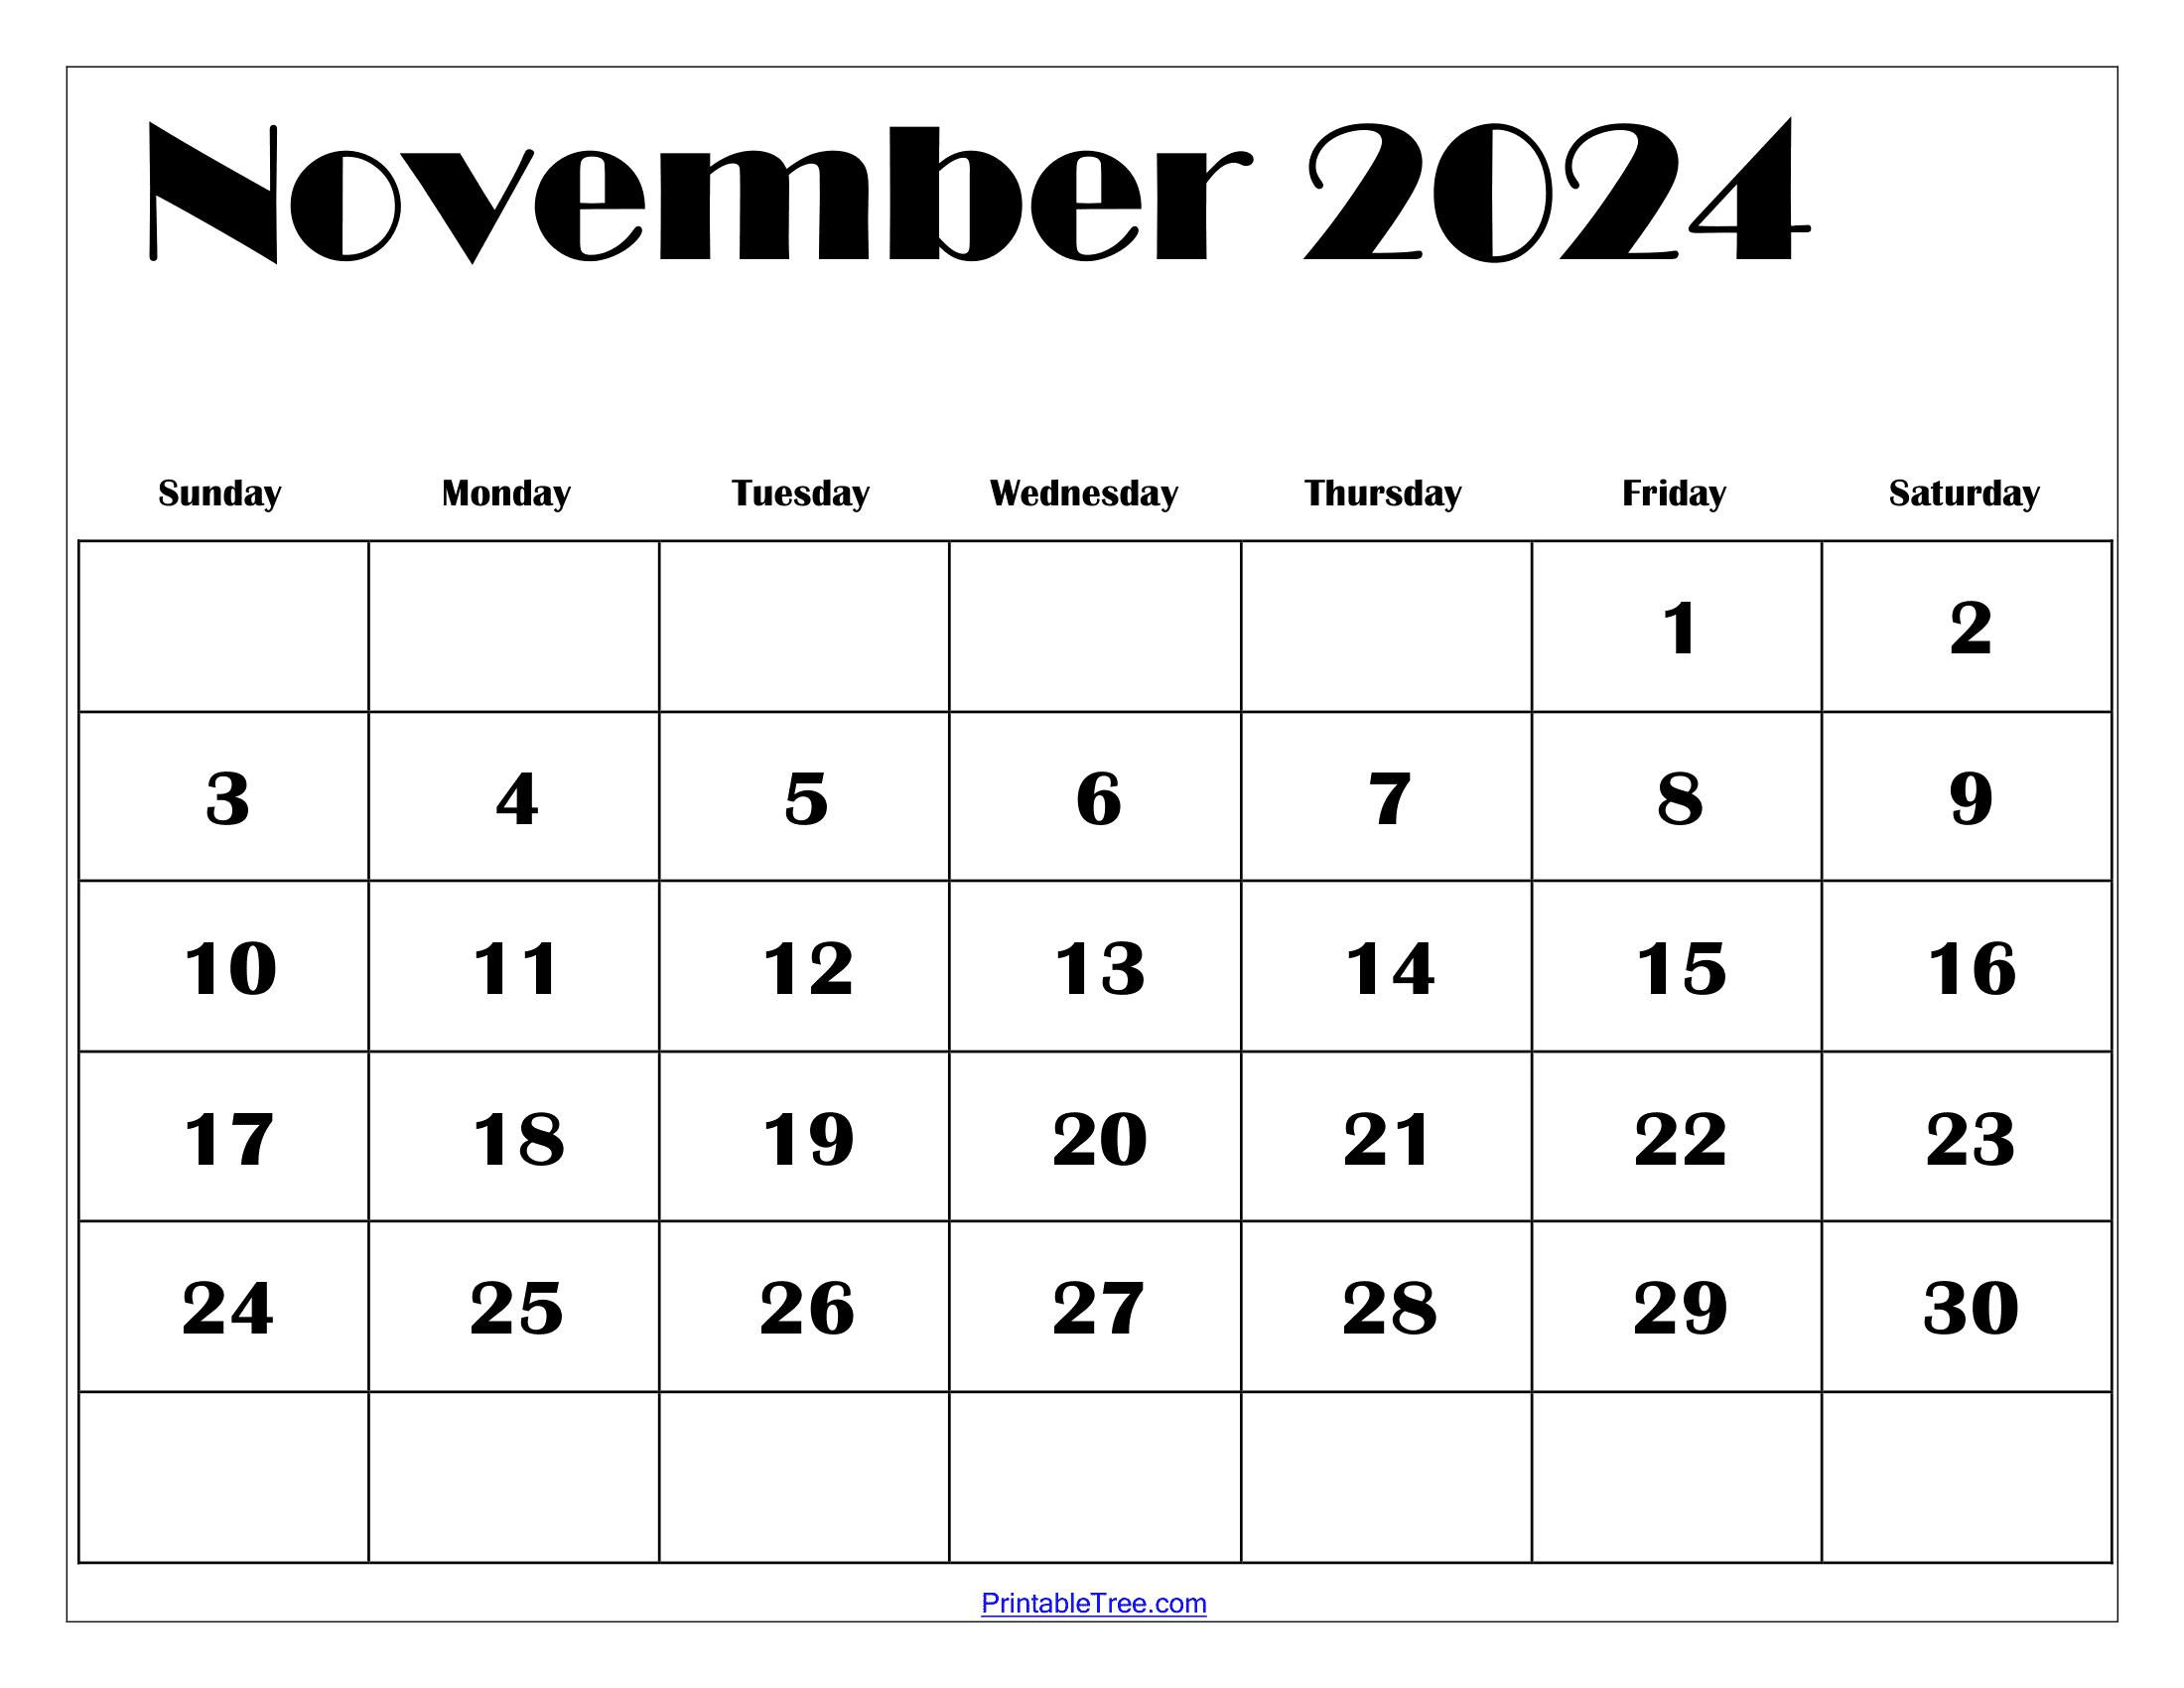 November 2024 Calendar Printable Pdf Template With Holidays with regard to Free Printable Appointment Calendar November 2024